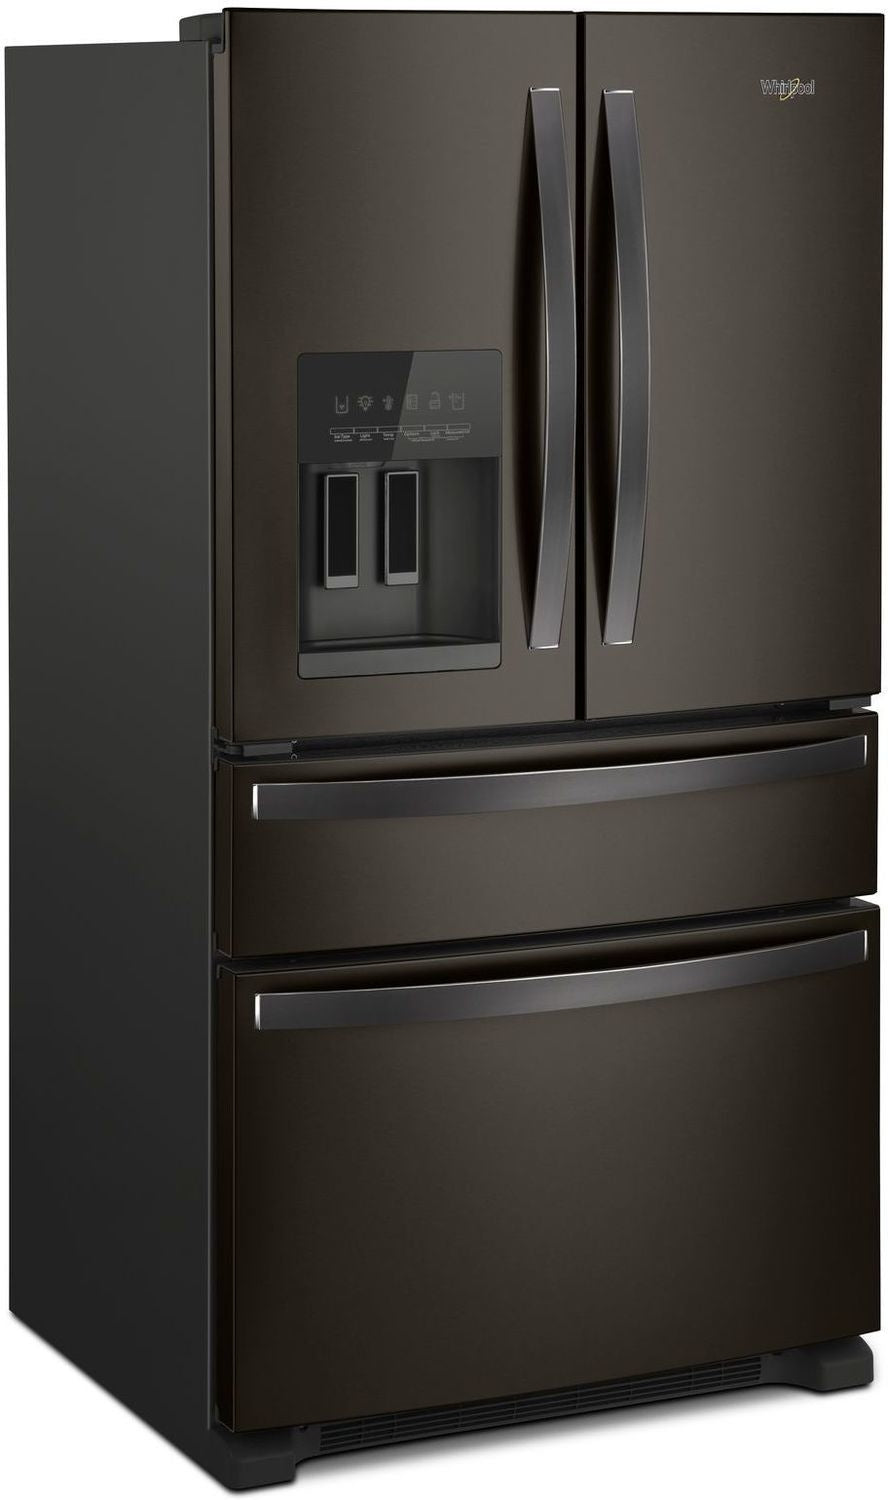 Whirlpool Black Stainless Steel French Door Refrigerator (25 Cu. Ft.) - WRX735SDHV